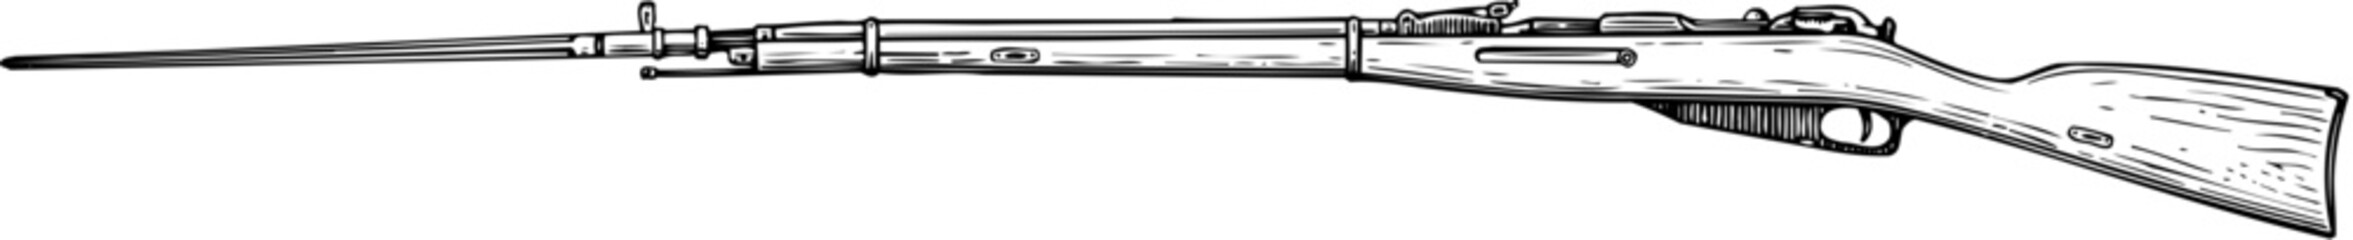 Rifle isolated on white